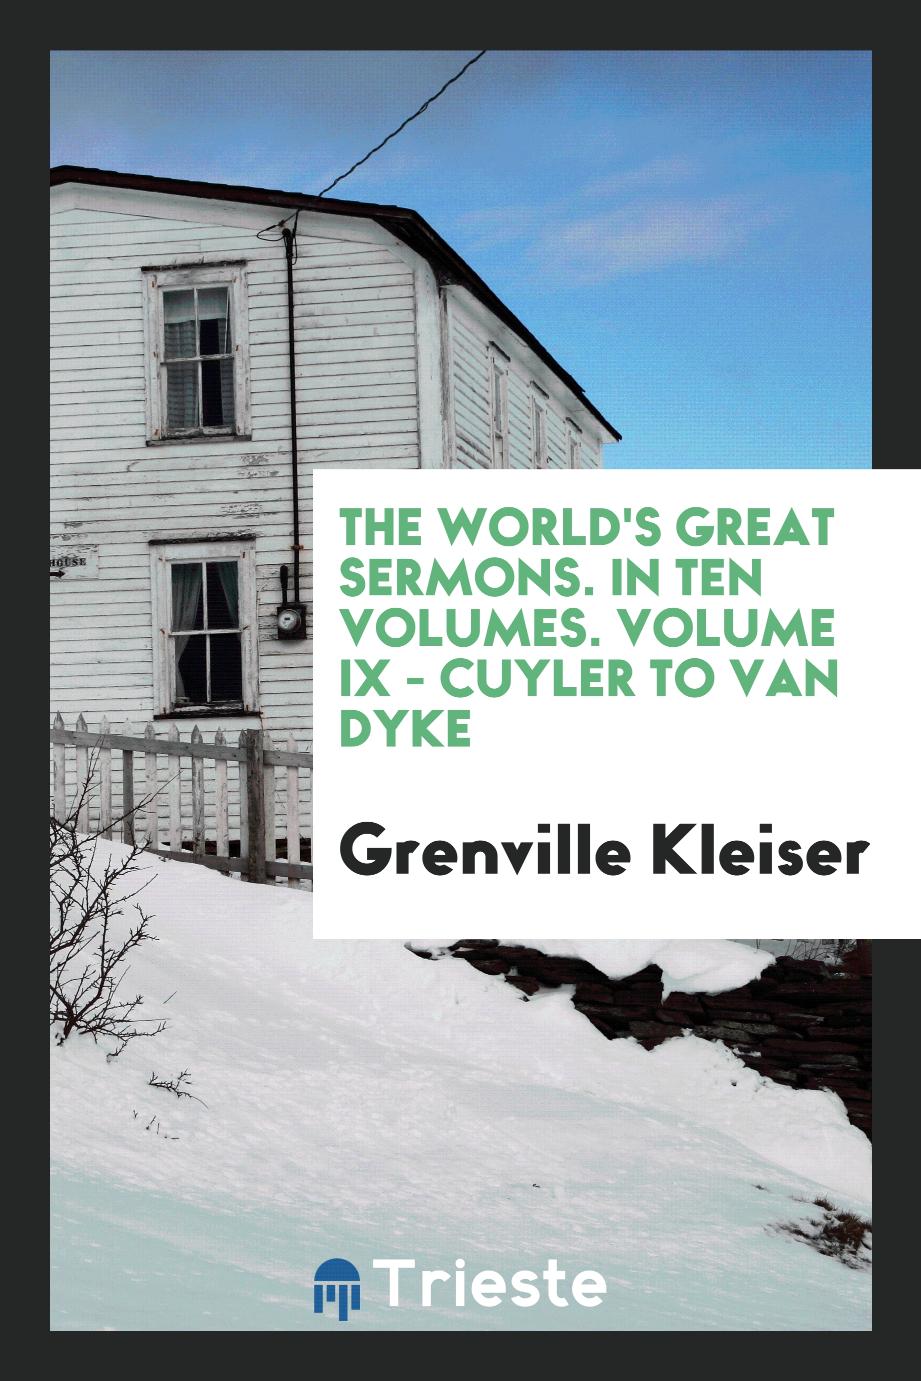 The World's Great Sermons. In Ten Volumes. Volume IX - Cuyler to van Dyke